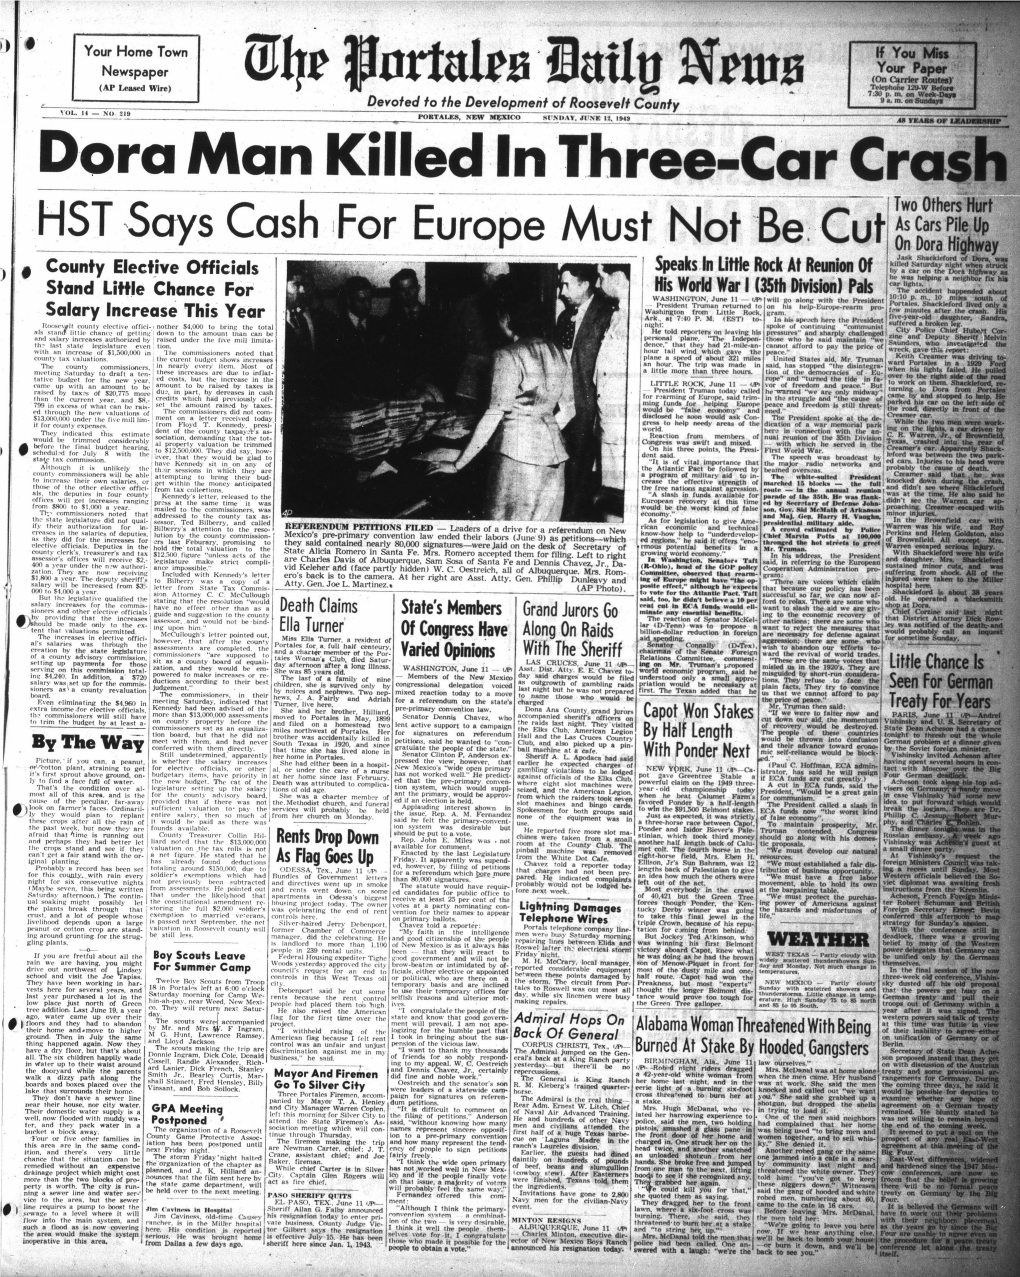 Dora Man Killed in Three Car Crash